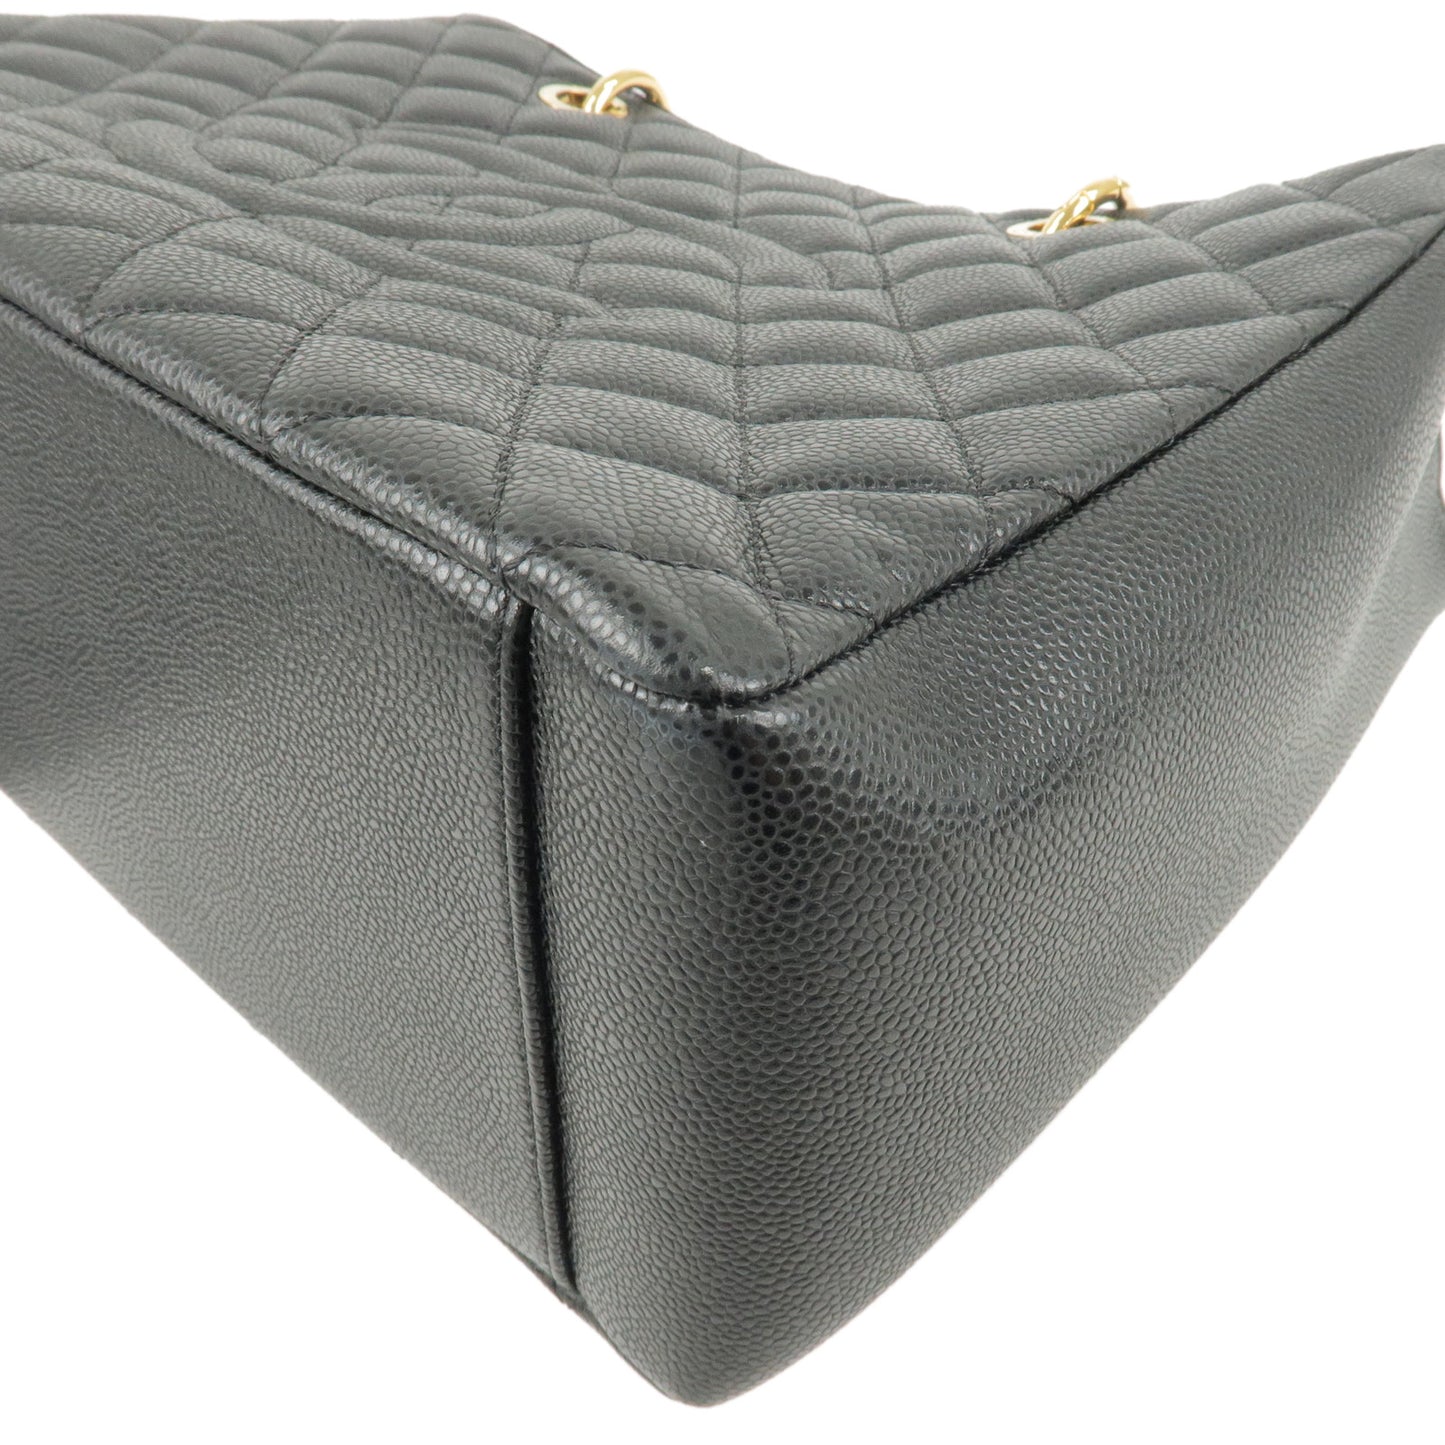 CHANEL Caviar Skin GST Chain Tote Bag Black Gold A50995